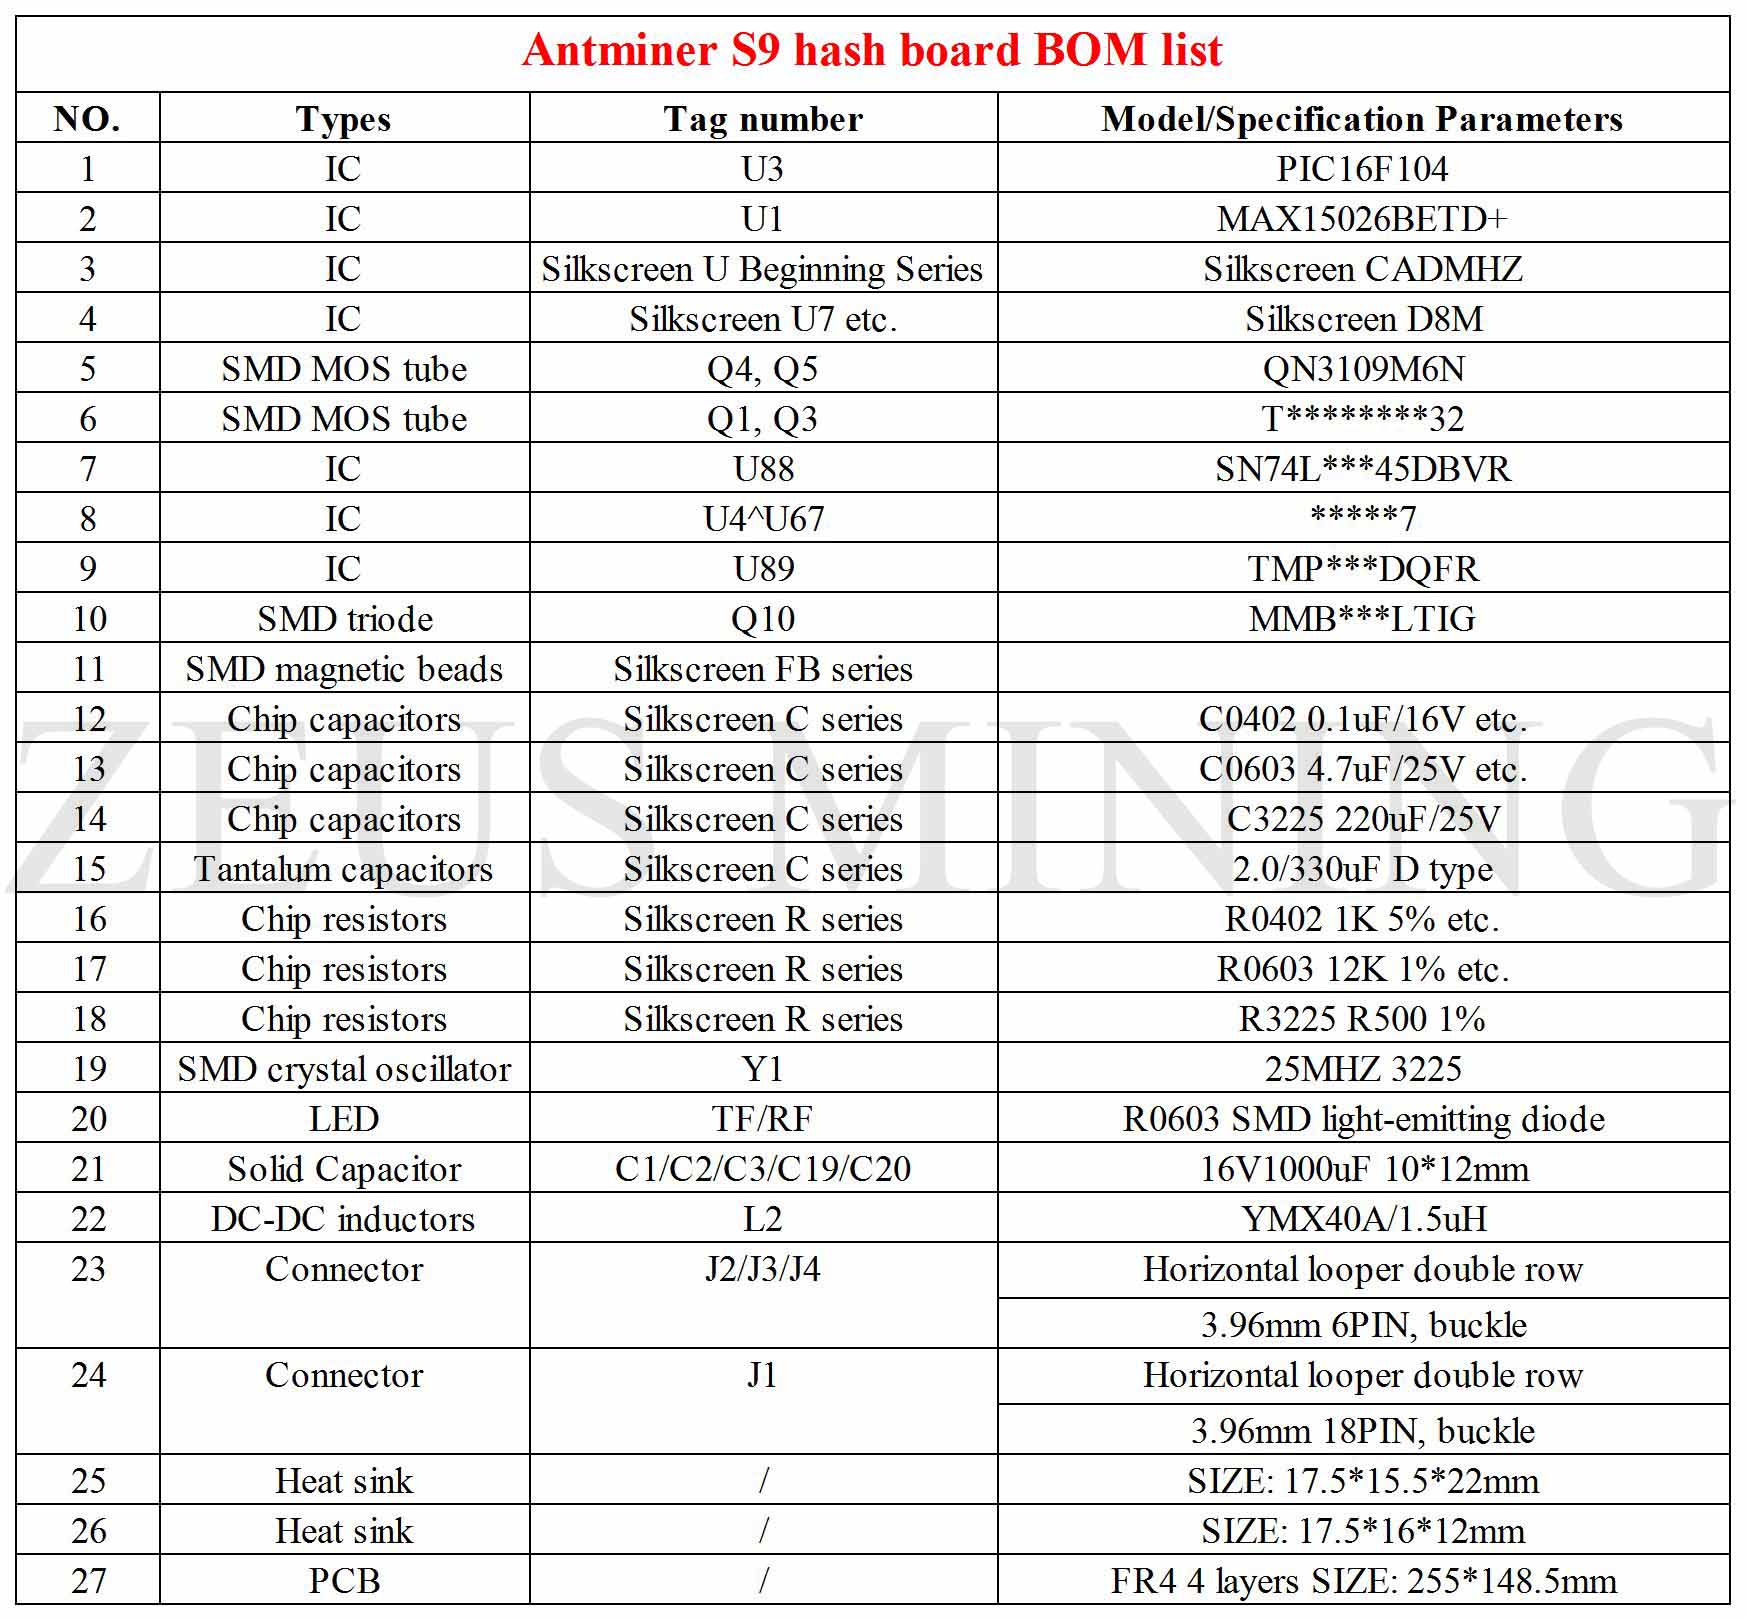 Antminer S9 hash board BOM list